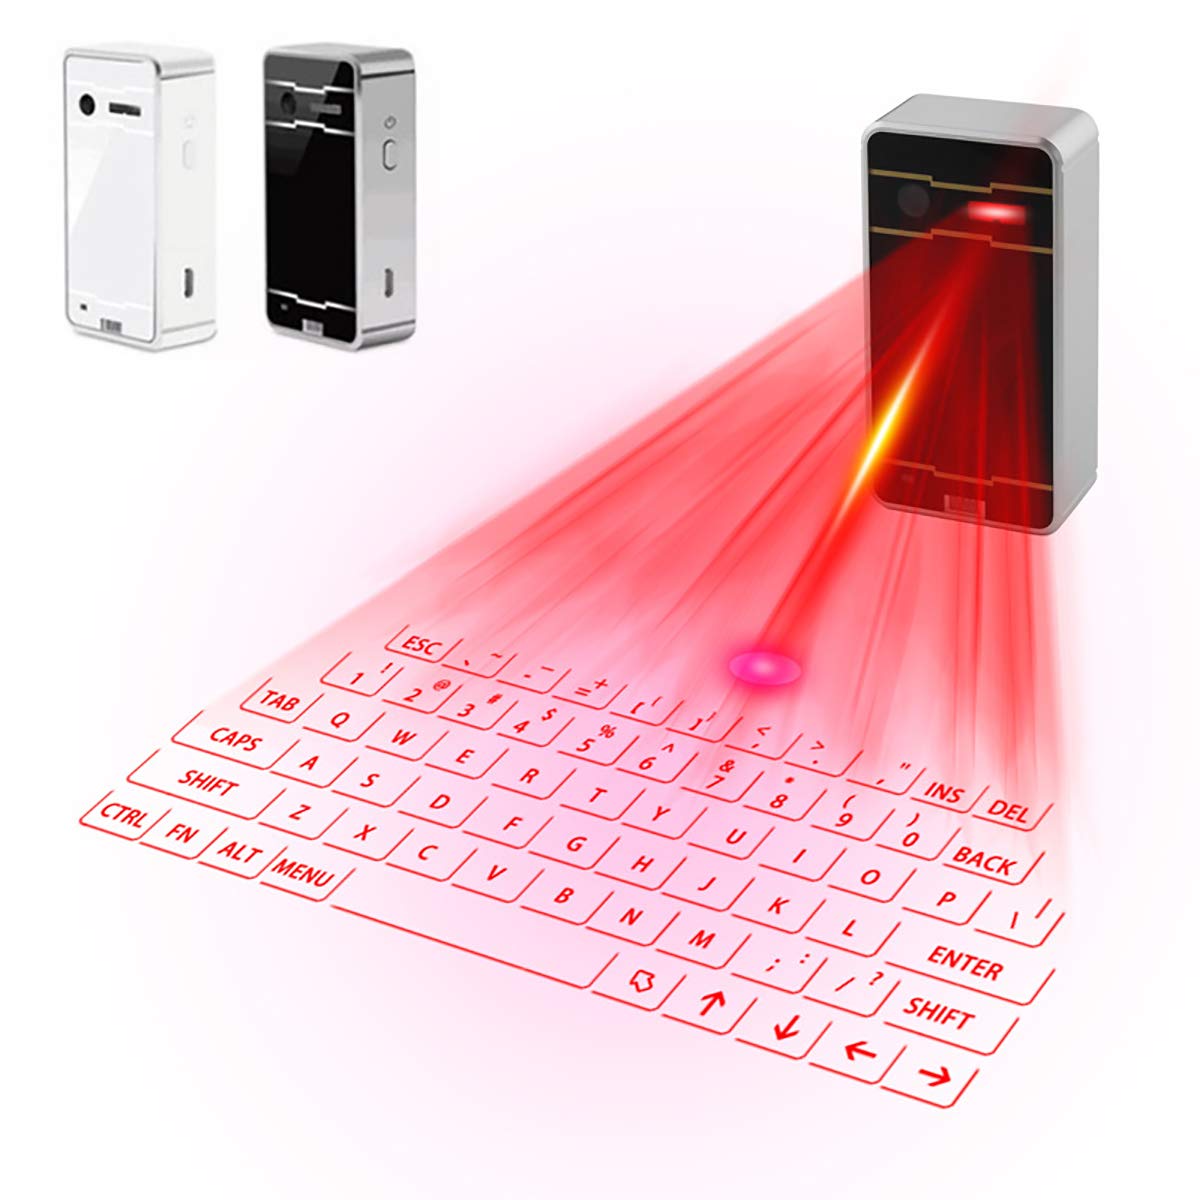 Zeerkeer Bluetooth Laser Tastatur Wireless Virtuelle Projektions Tastatur Tragbare für IOS Android Smart Telefon Pad Tablet PC Notebook (Schwarz)